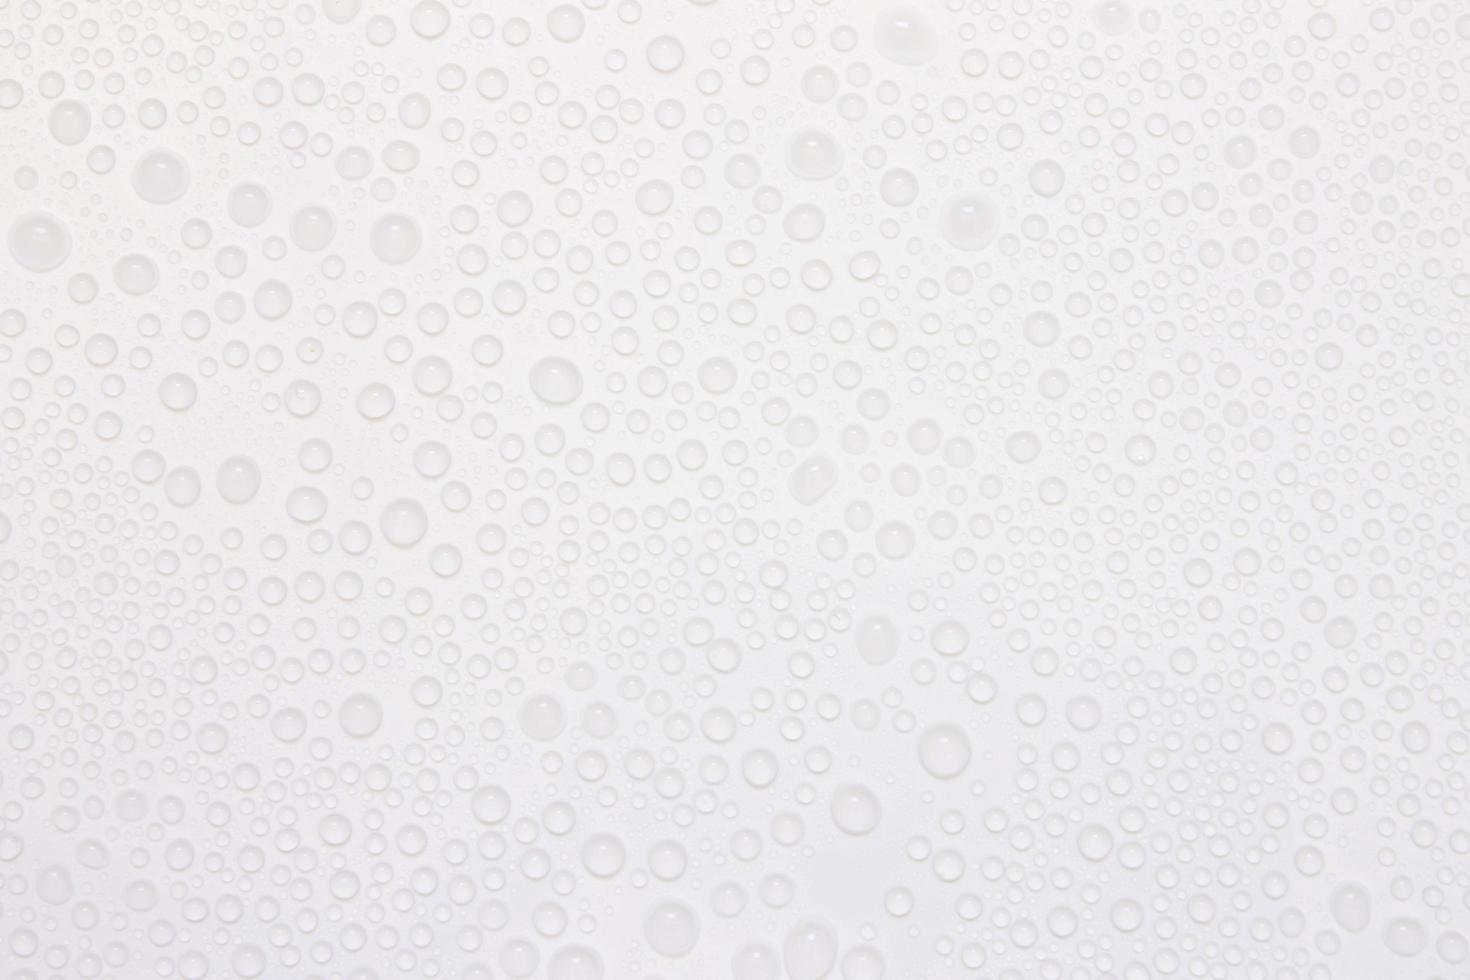 waterdruppel op wit oppervlak als achtergrond foto